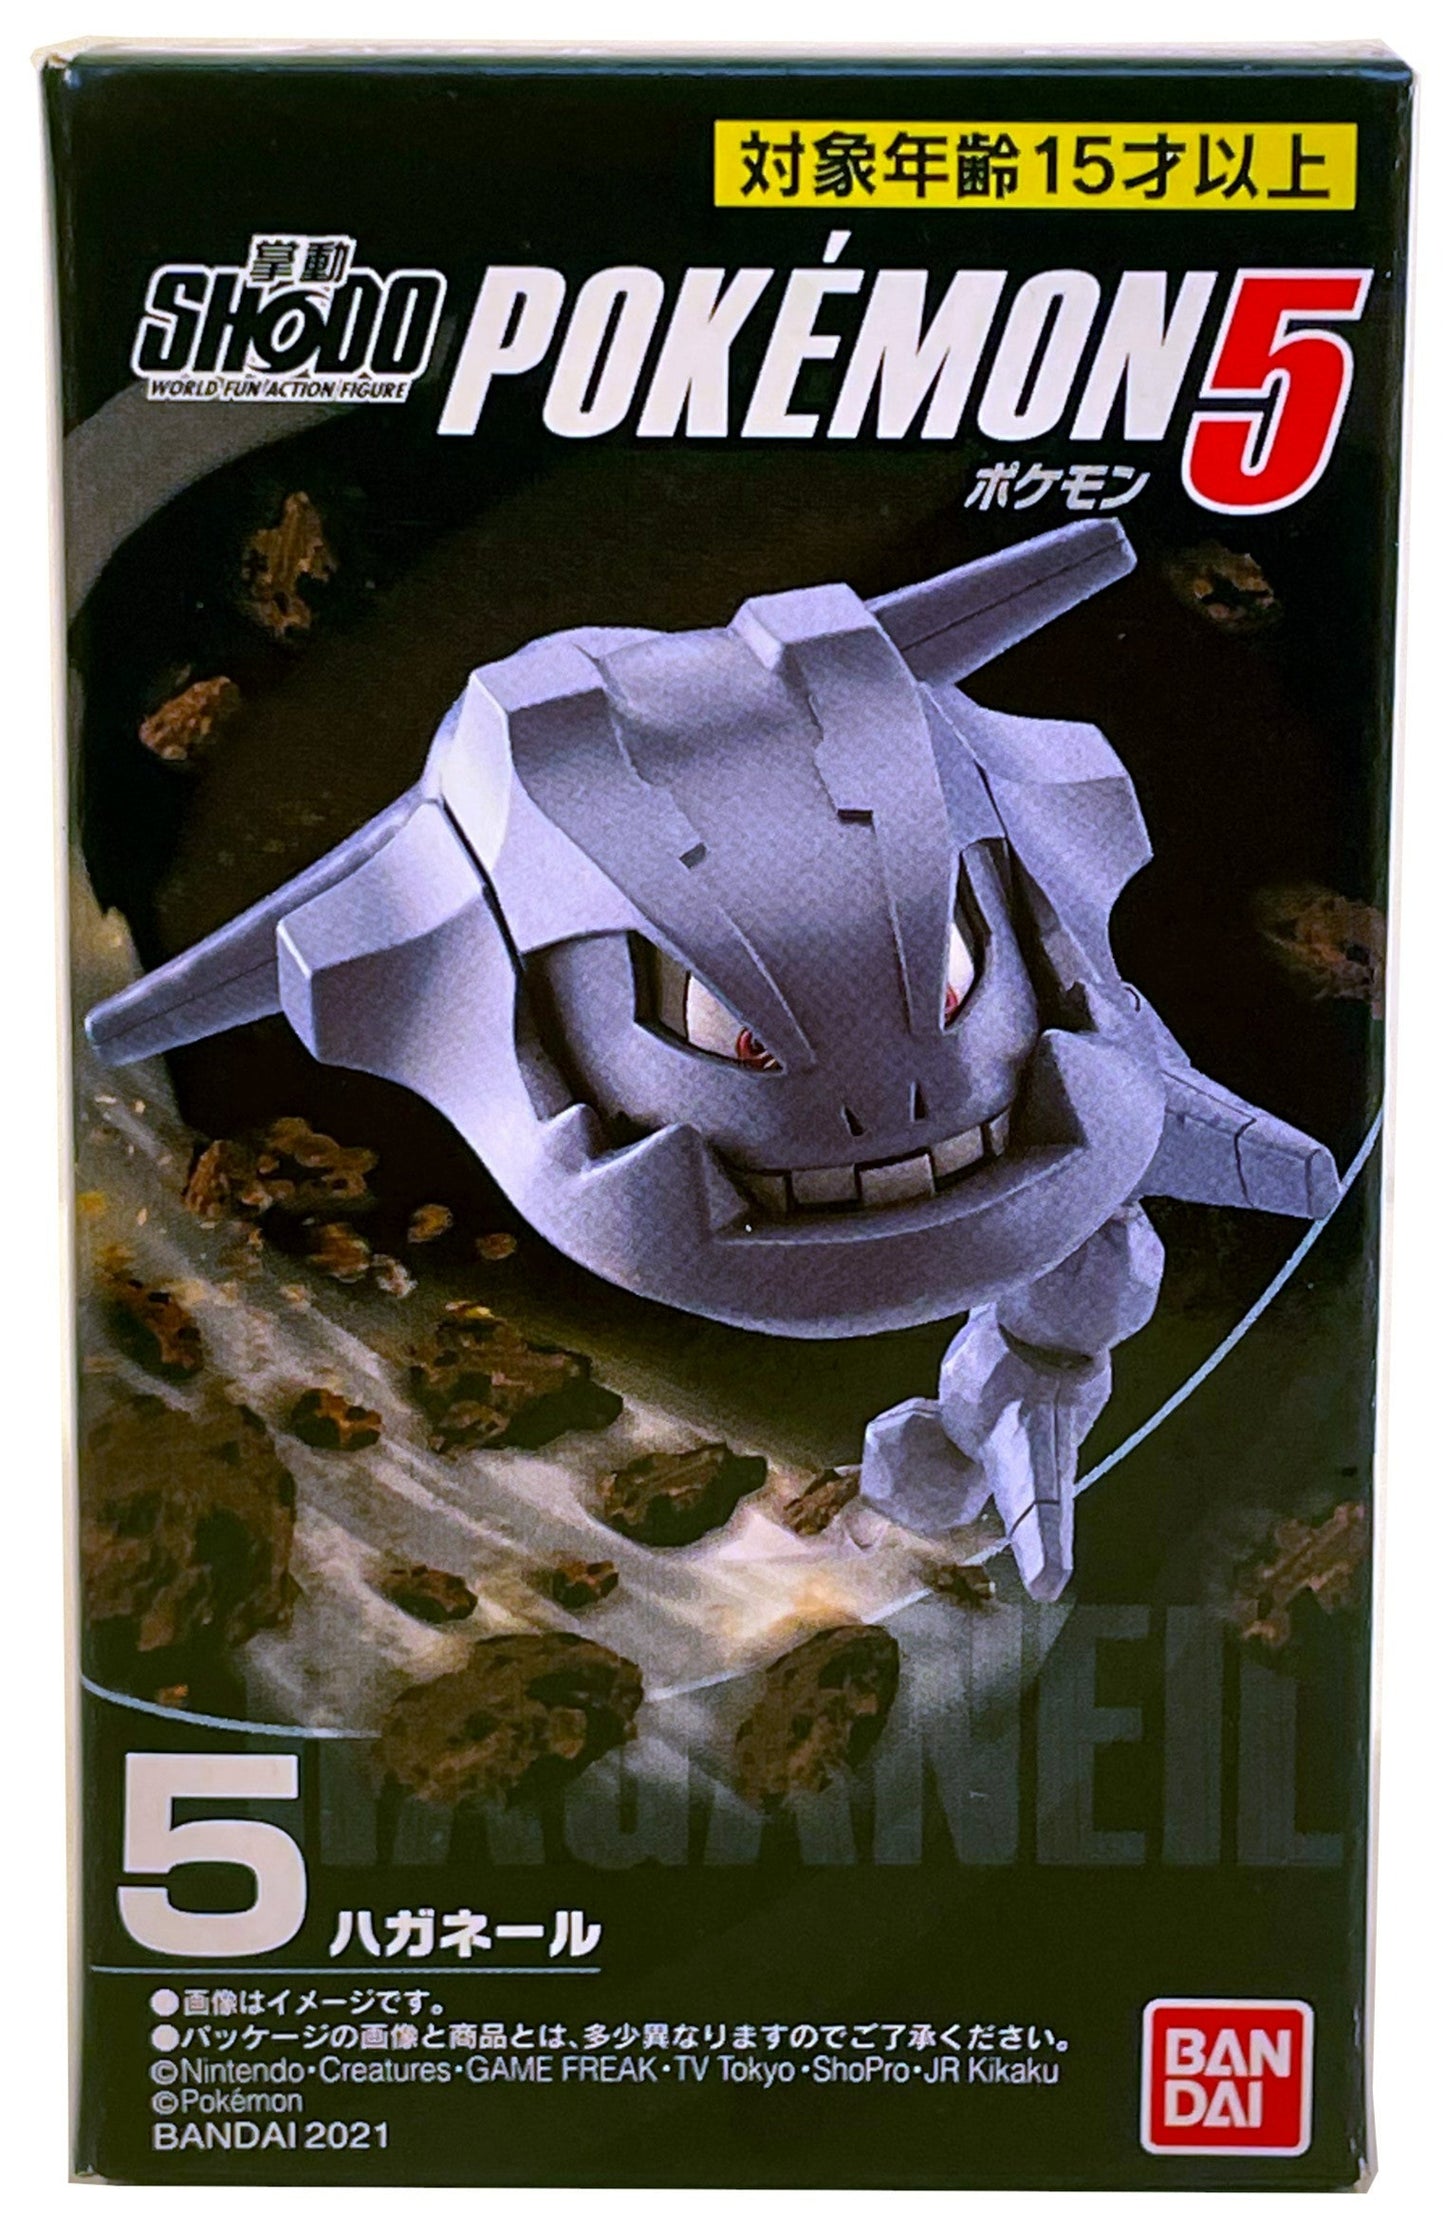 Pokémon Shodo Volume 5 Steelix Bandai 3" Inch Figure